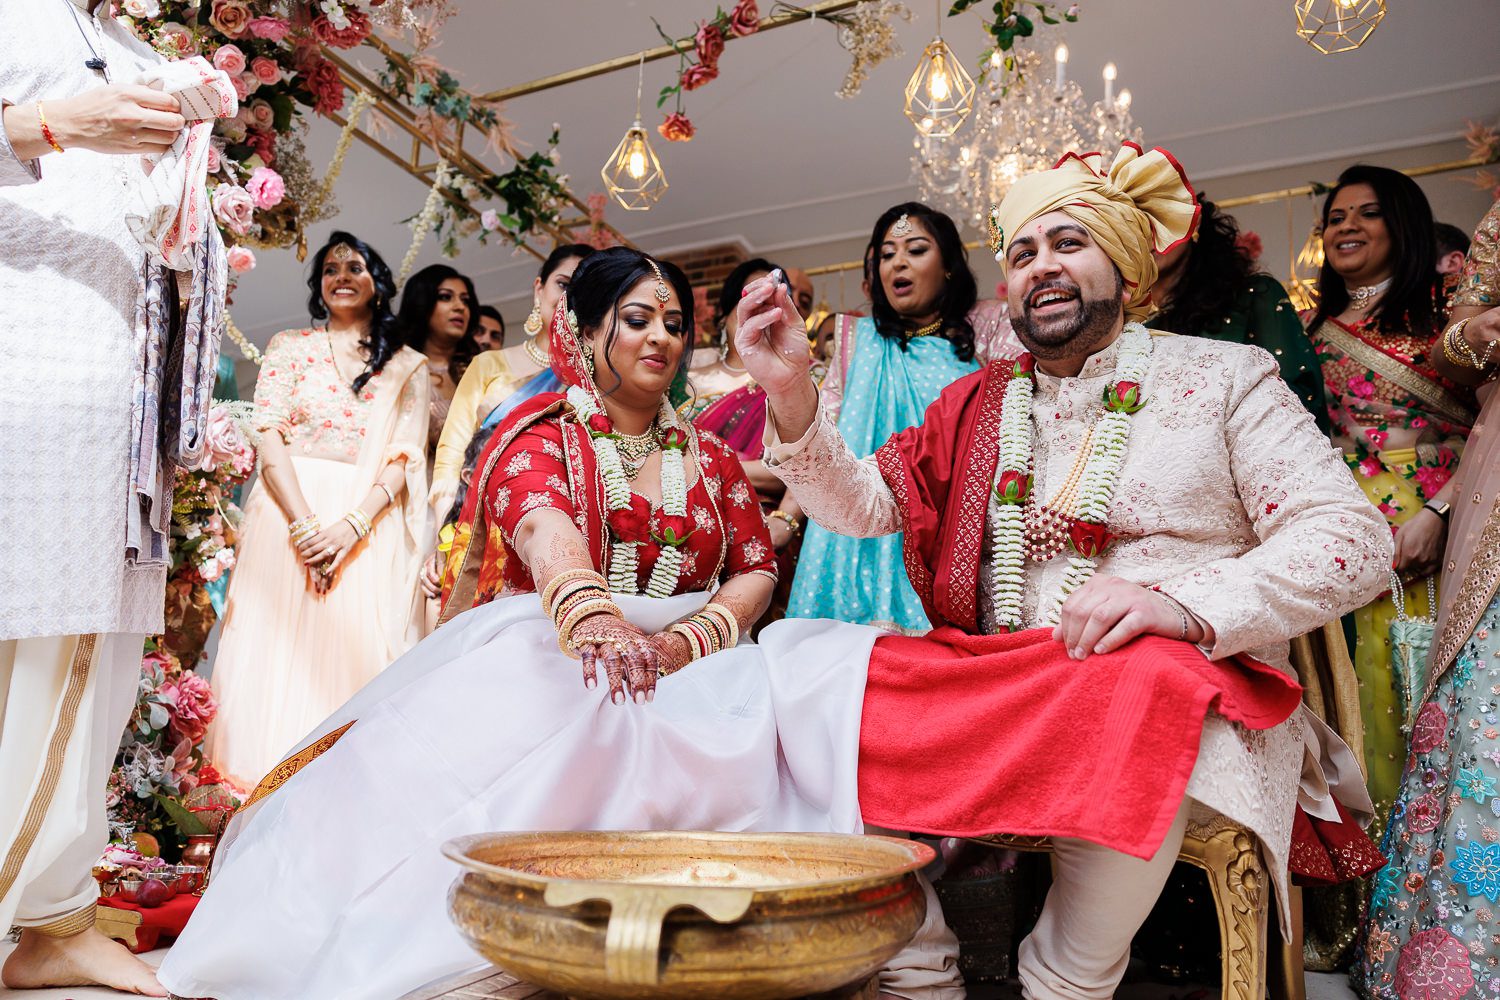 Koda Kodi game during Hindu wedding